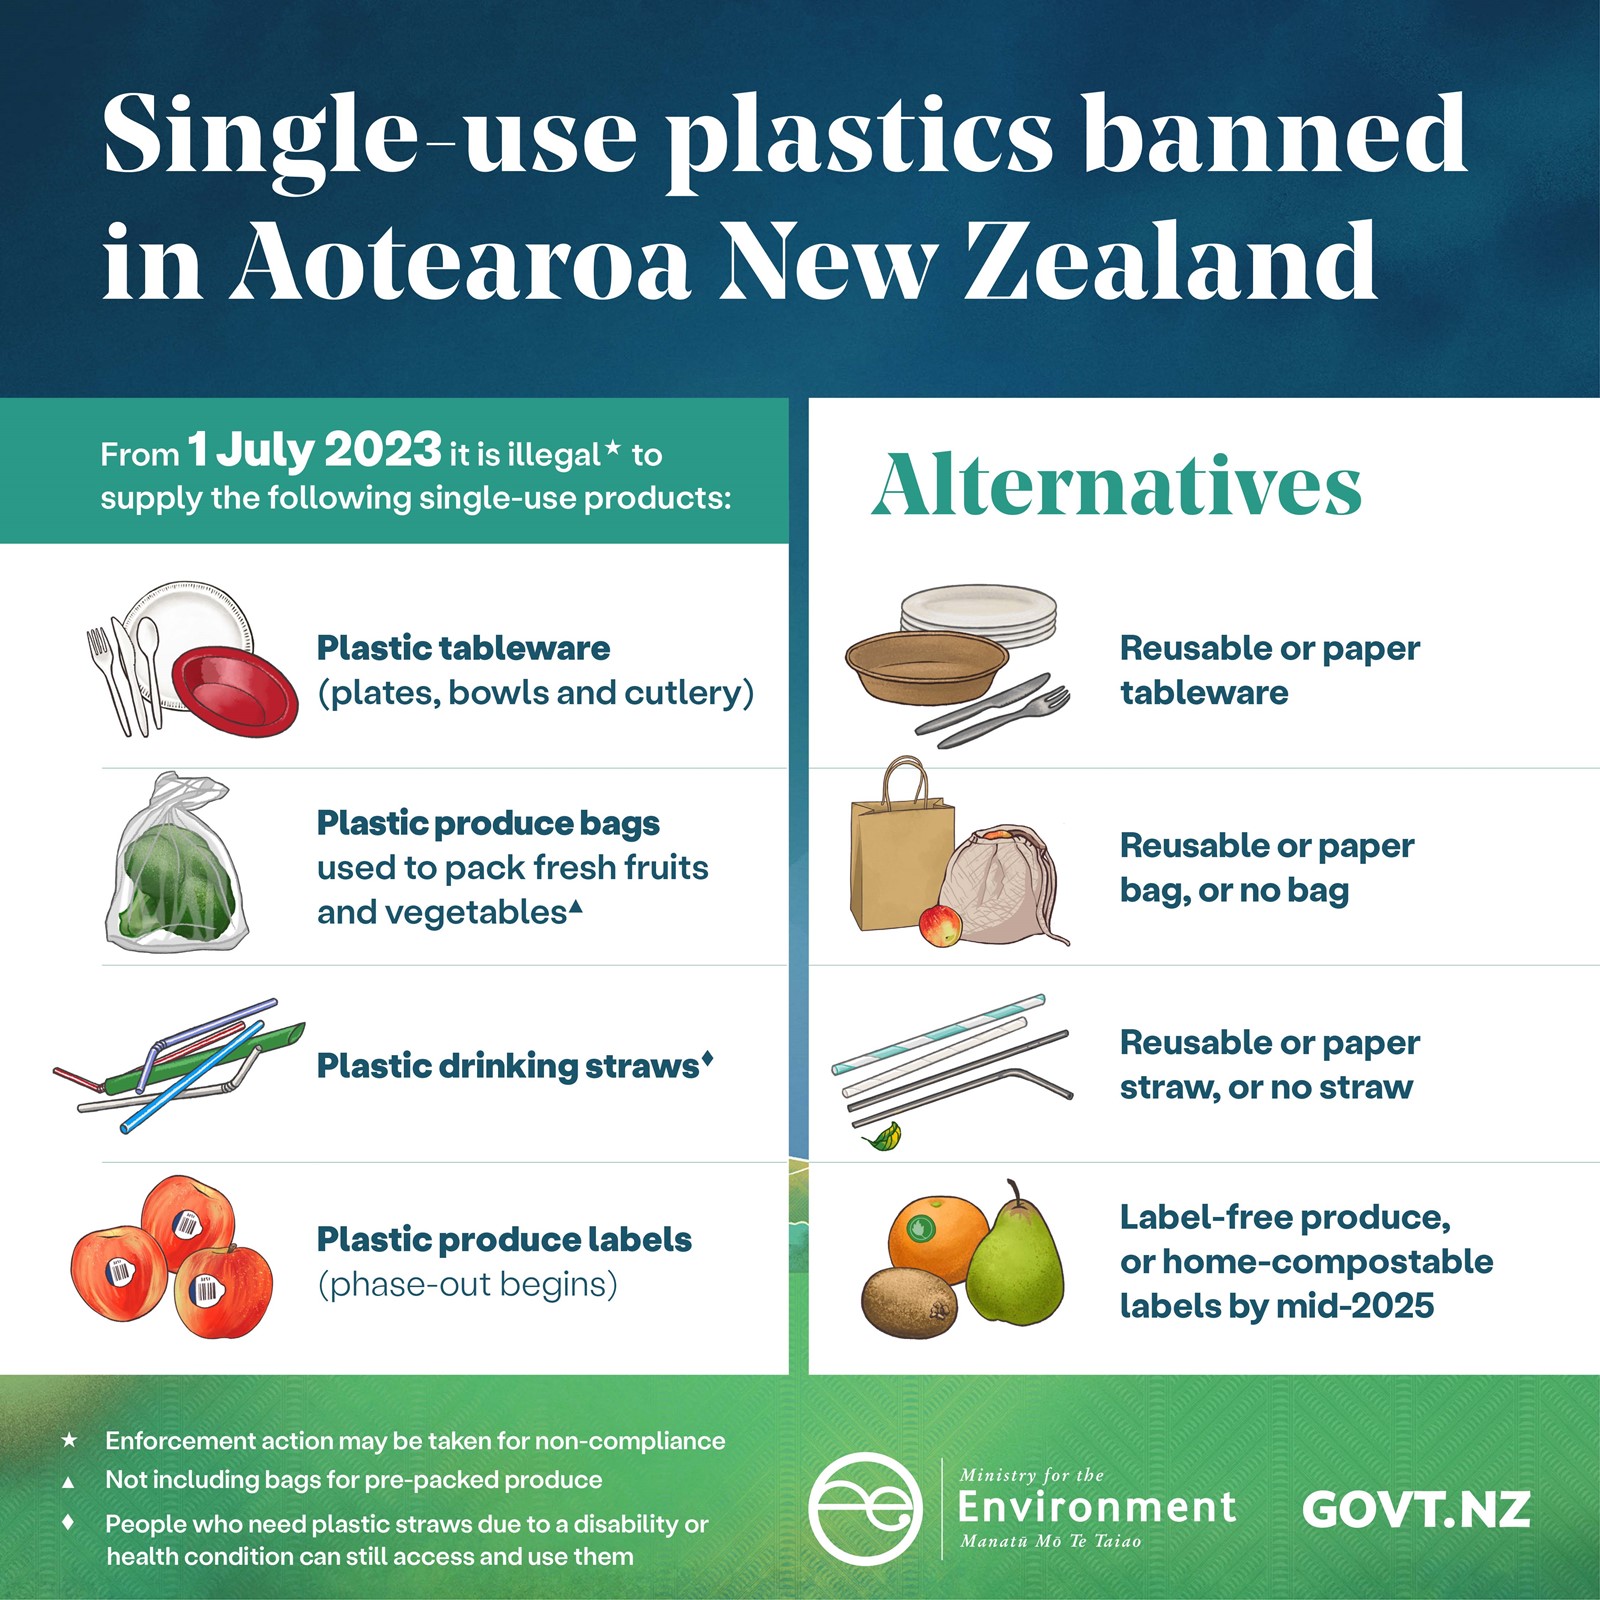 Single use plastics banned in Aotearoa New Zealand from 1 July 2023.